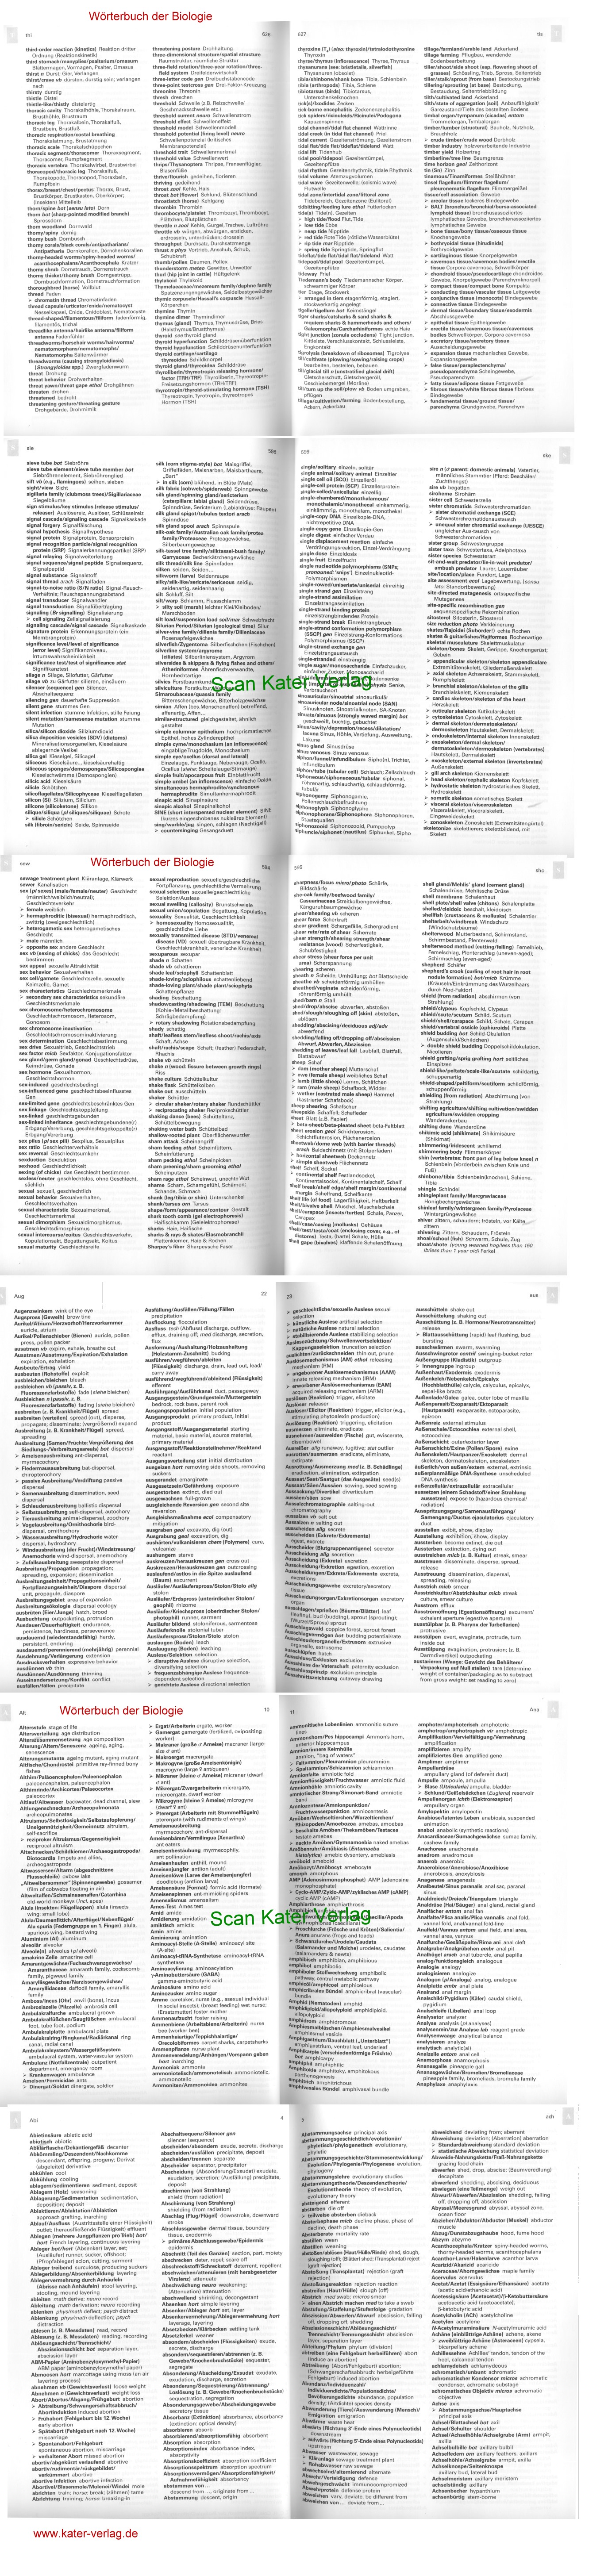 Cole: Wörterbuch der Biologie DE-EN, EN-DE